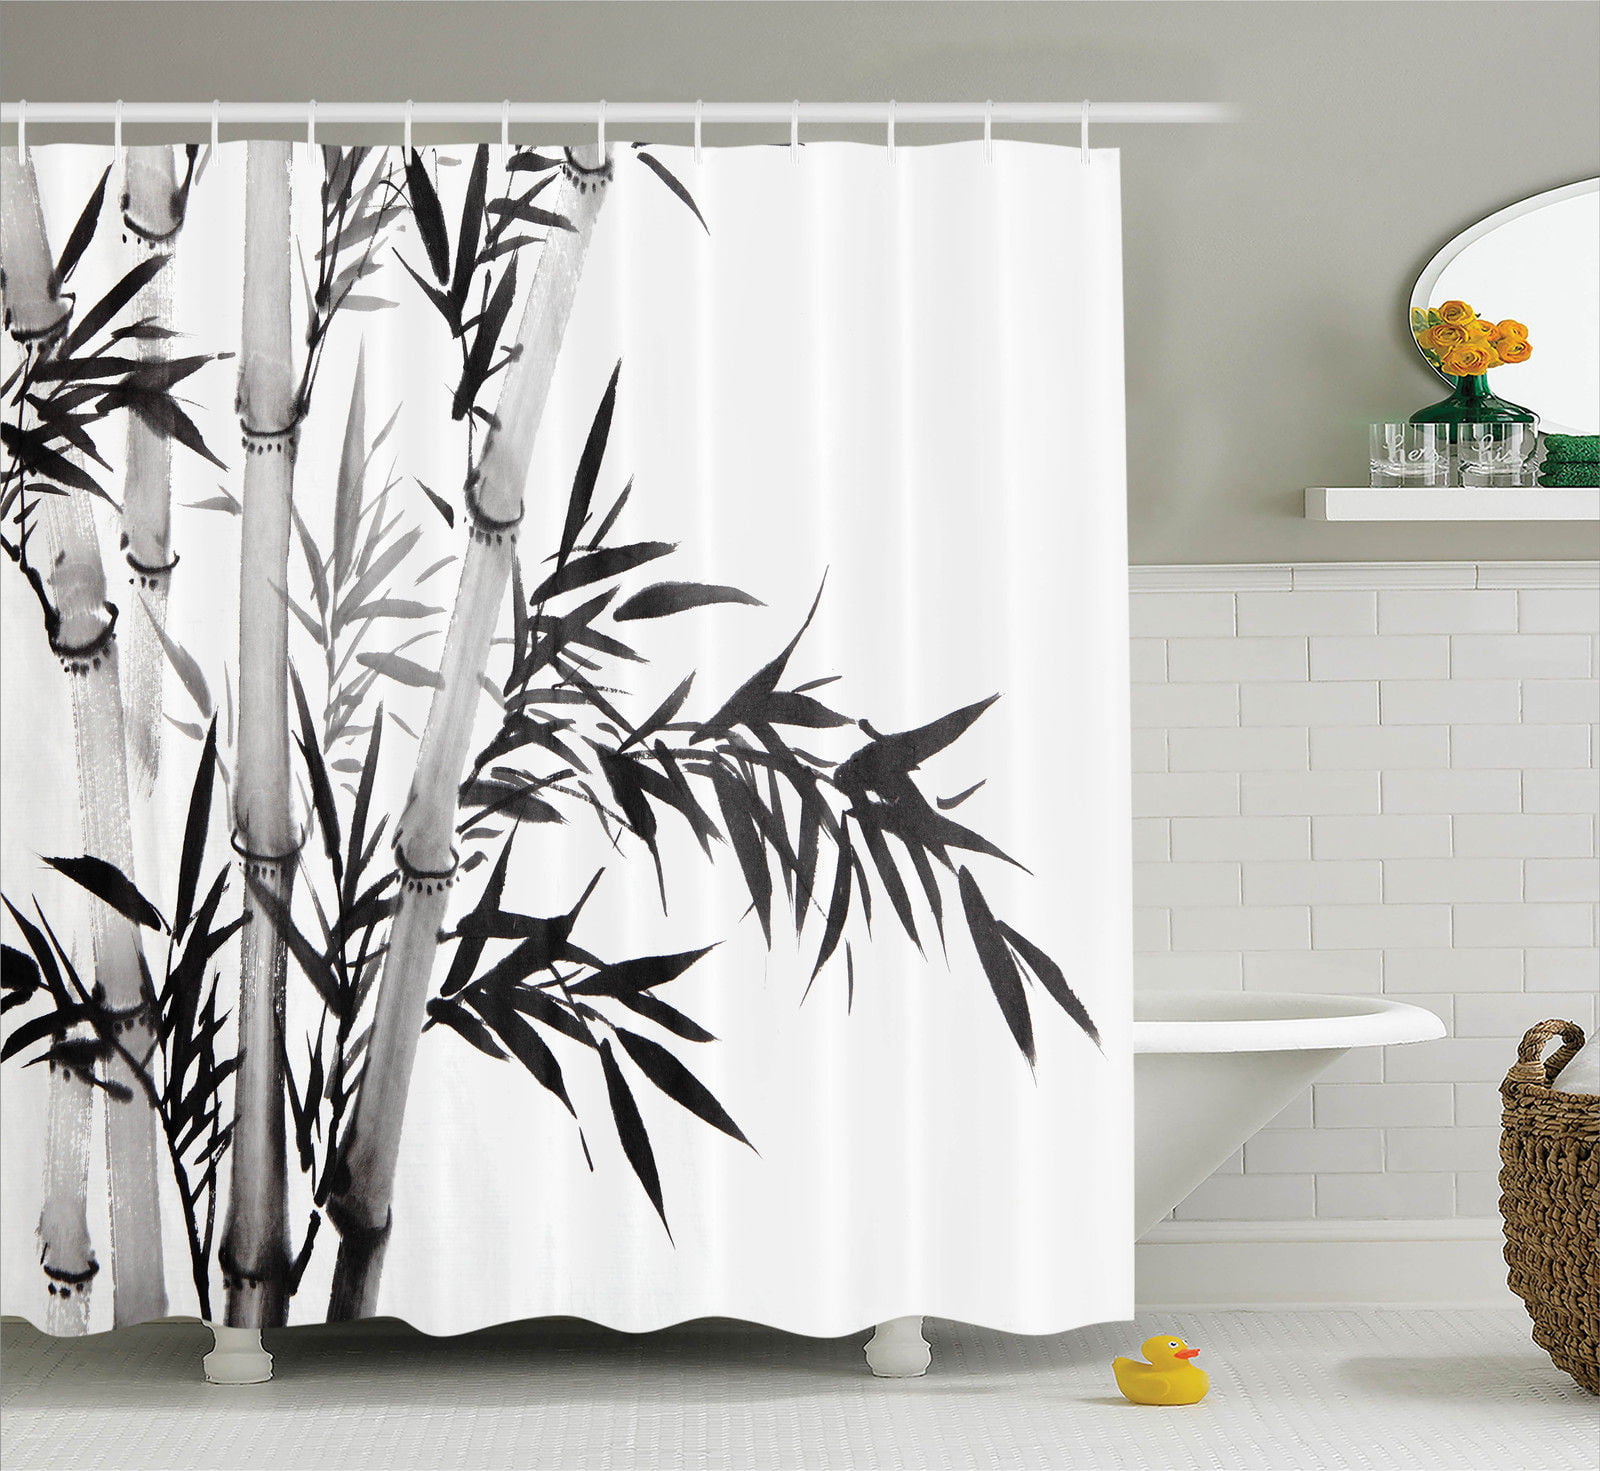 Waterproof Shower Curtain Bamboo Plum Blossom Art Bathroom Decor Shower Curtain 